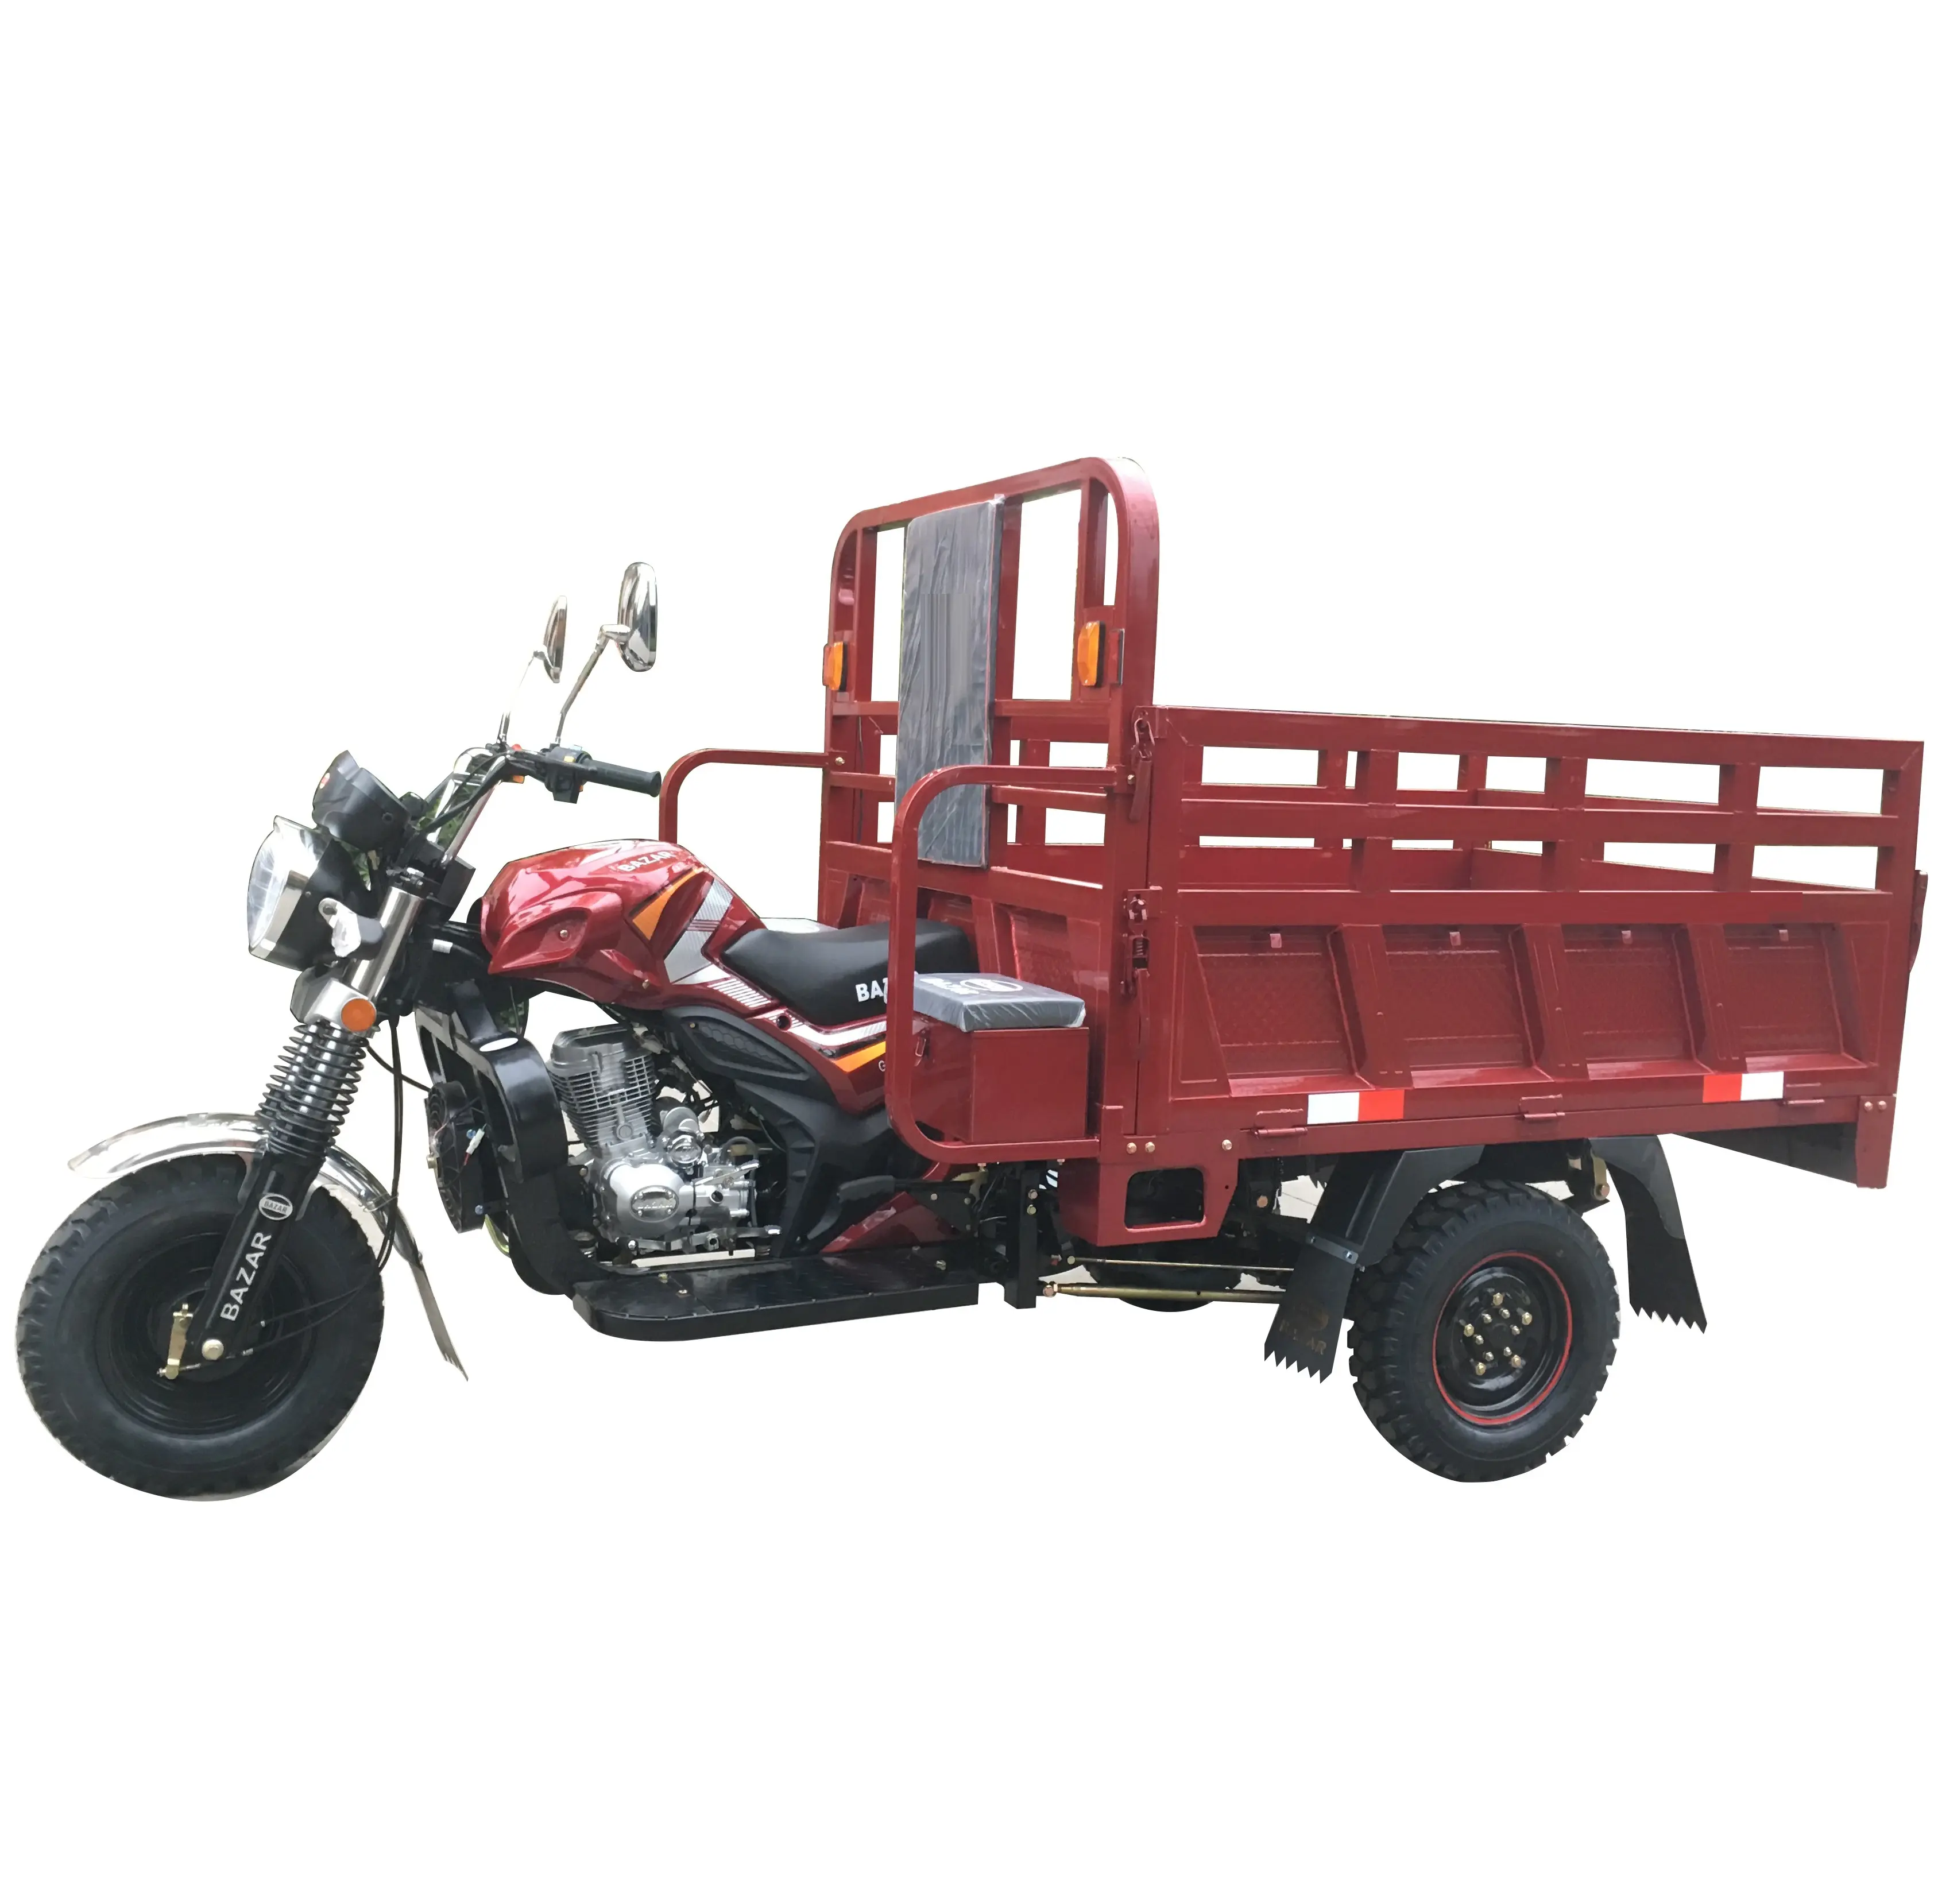 Yüksek kaliteli üst configrations motorlu üç tekerlekli bisiklet kargo modeli MOTO-R2